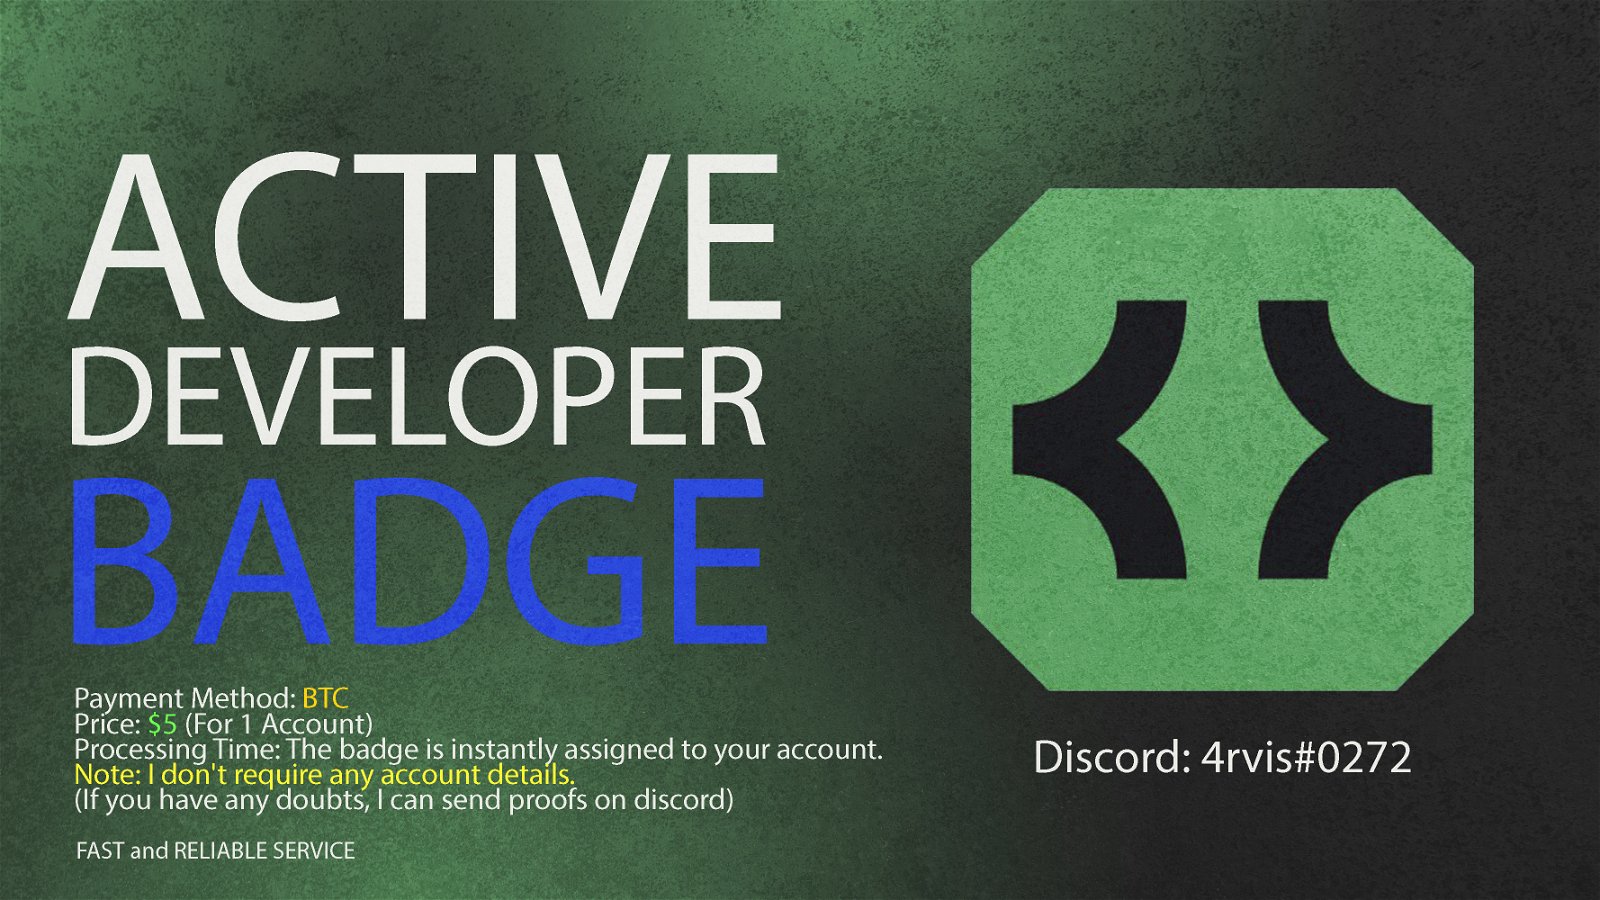 Selling - Early Verified Developer & Active Developer Badge - EpicNPC